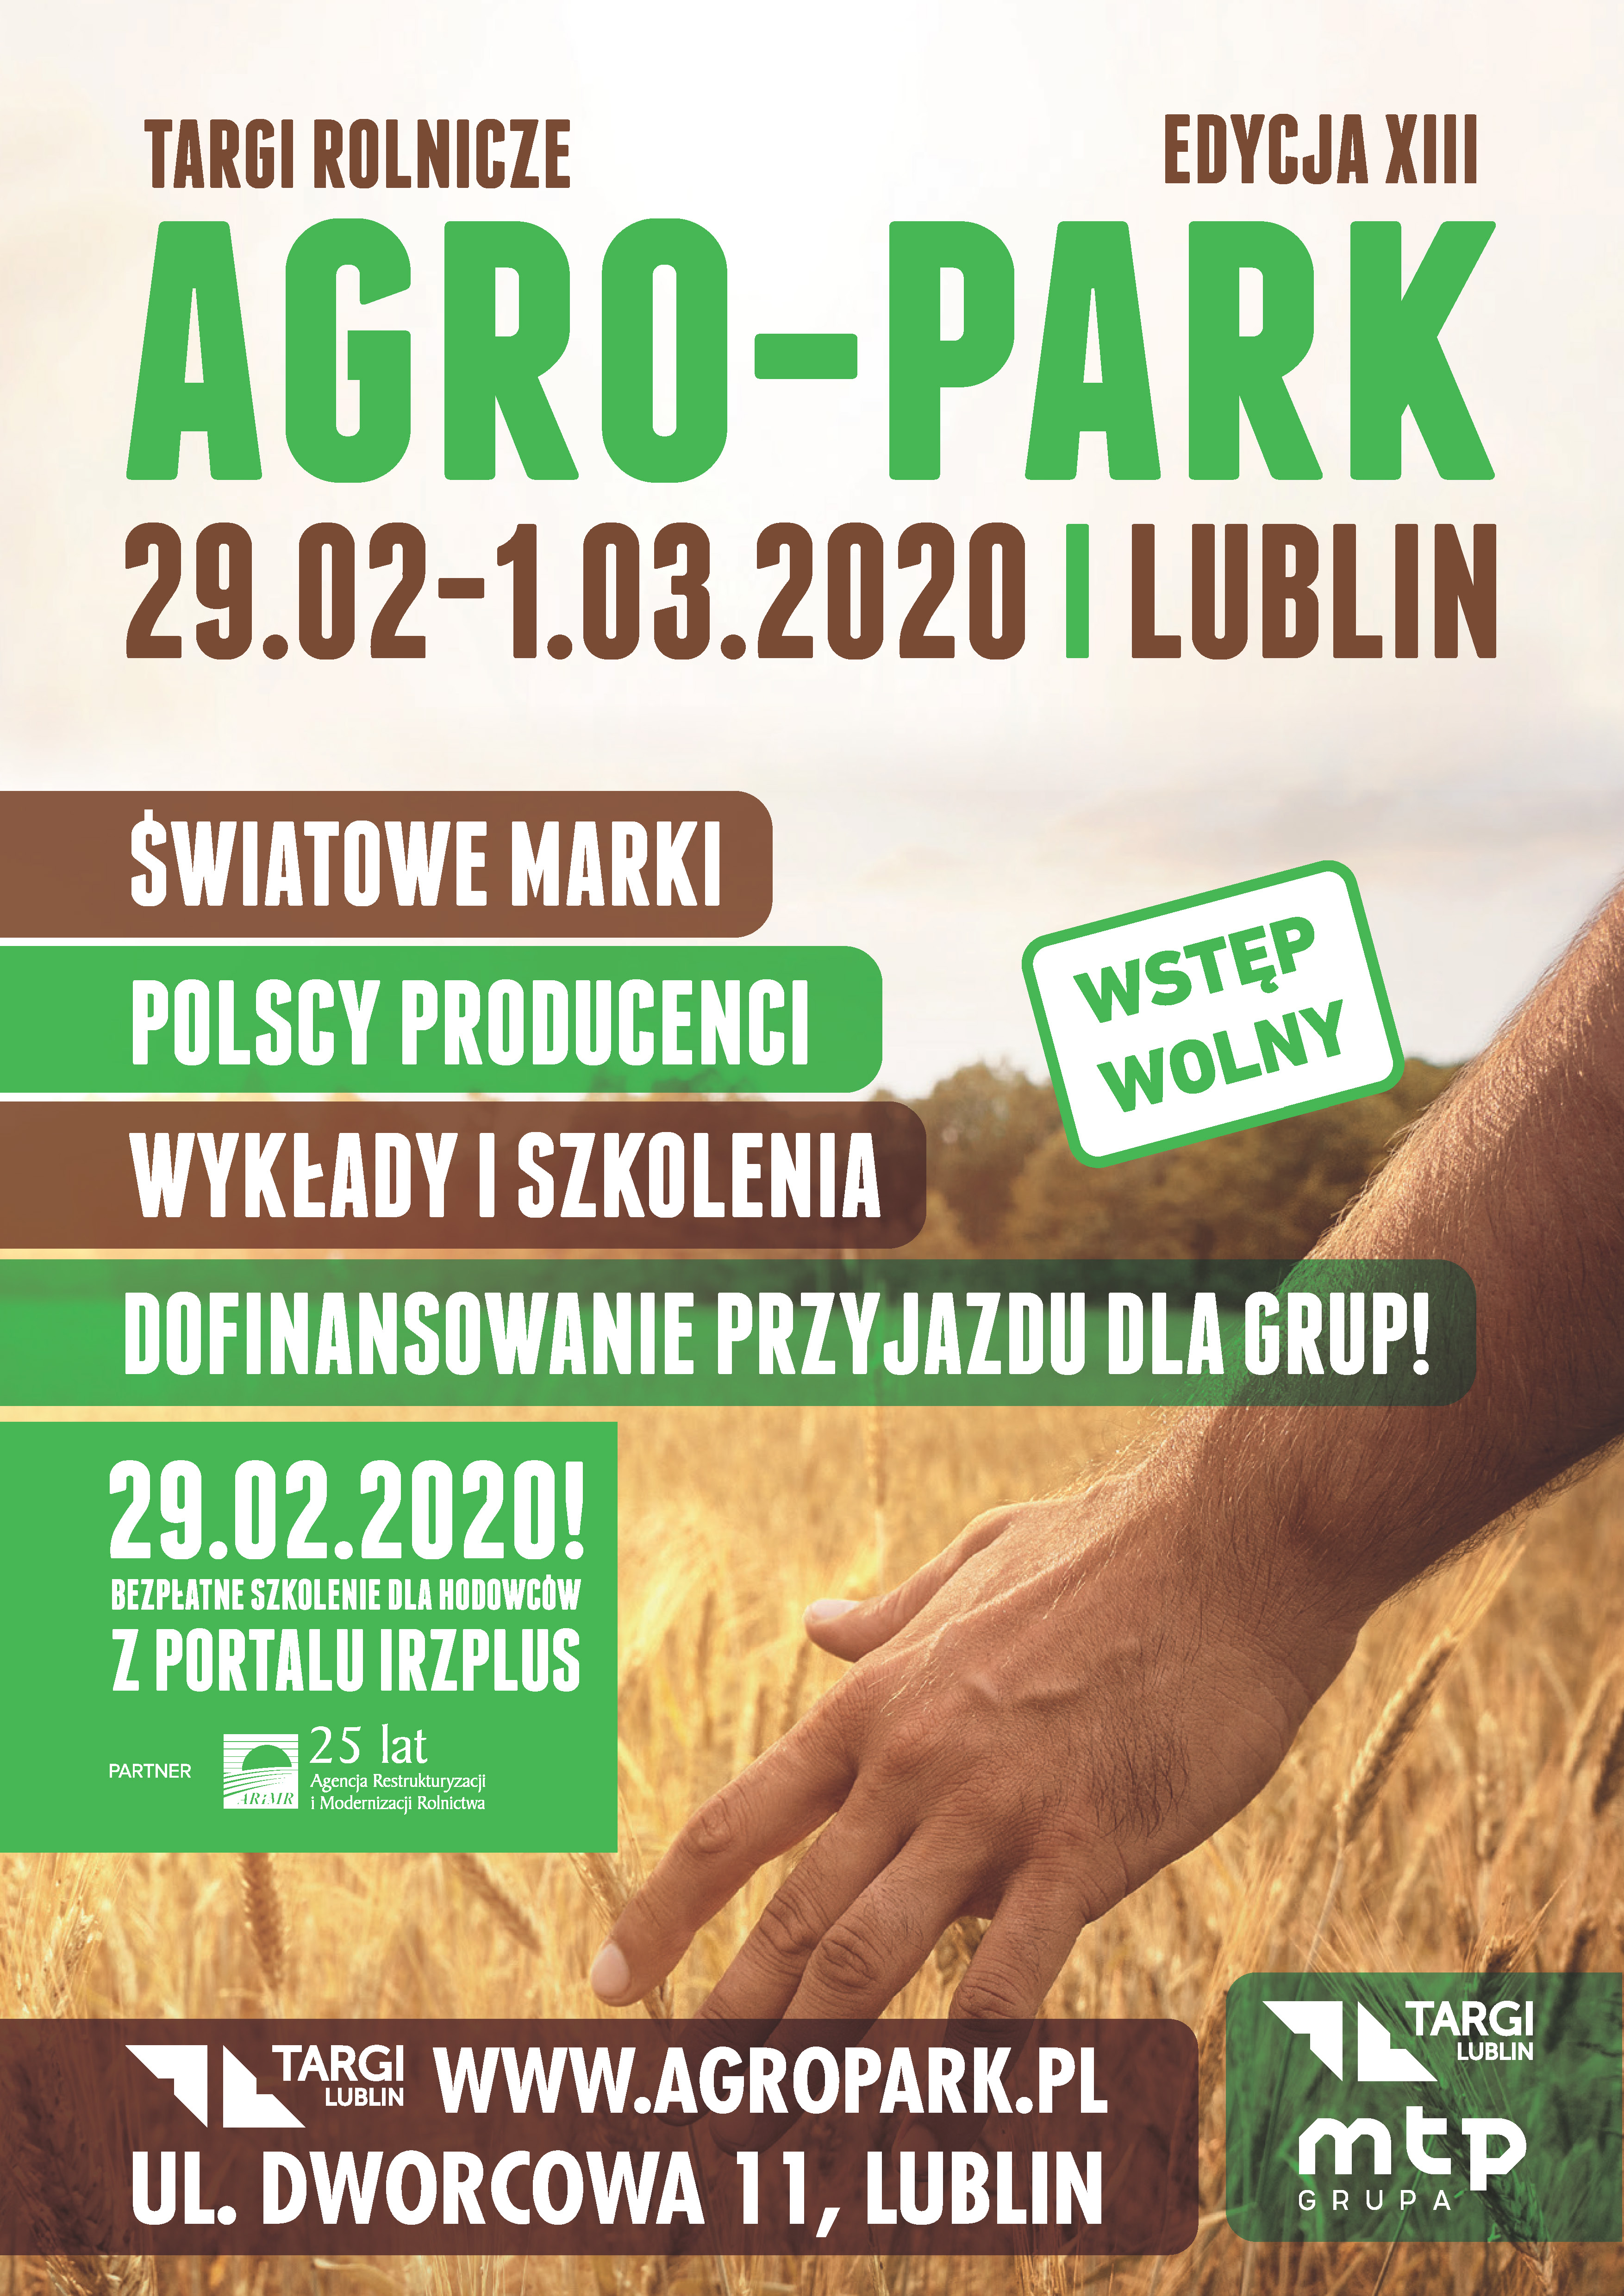 Agro-Park Targi Rolnicze plakat